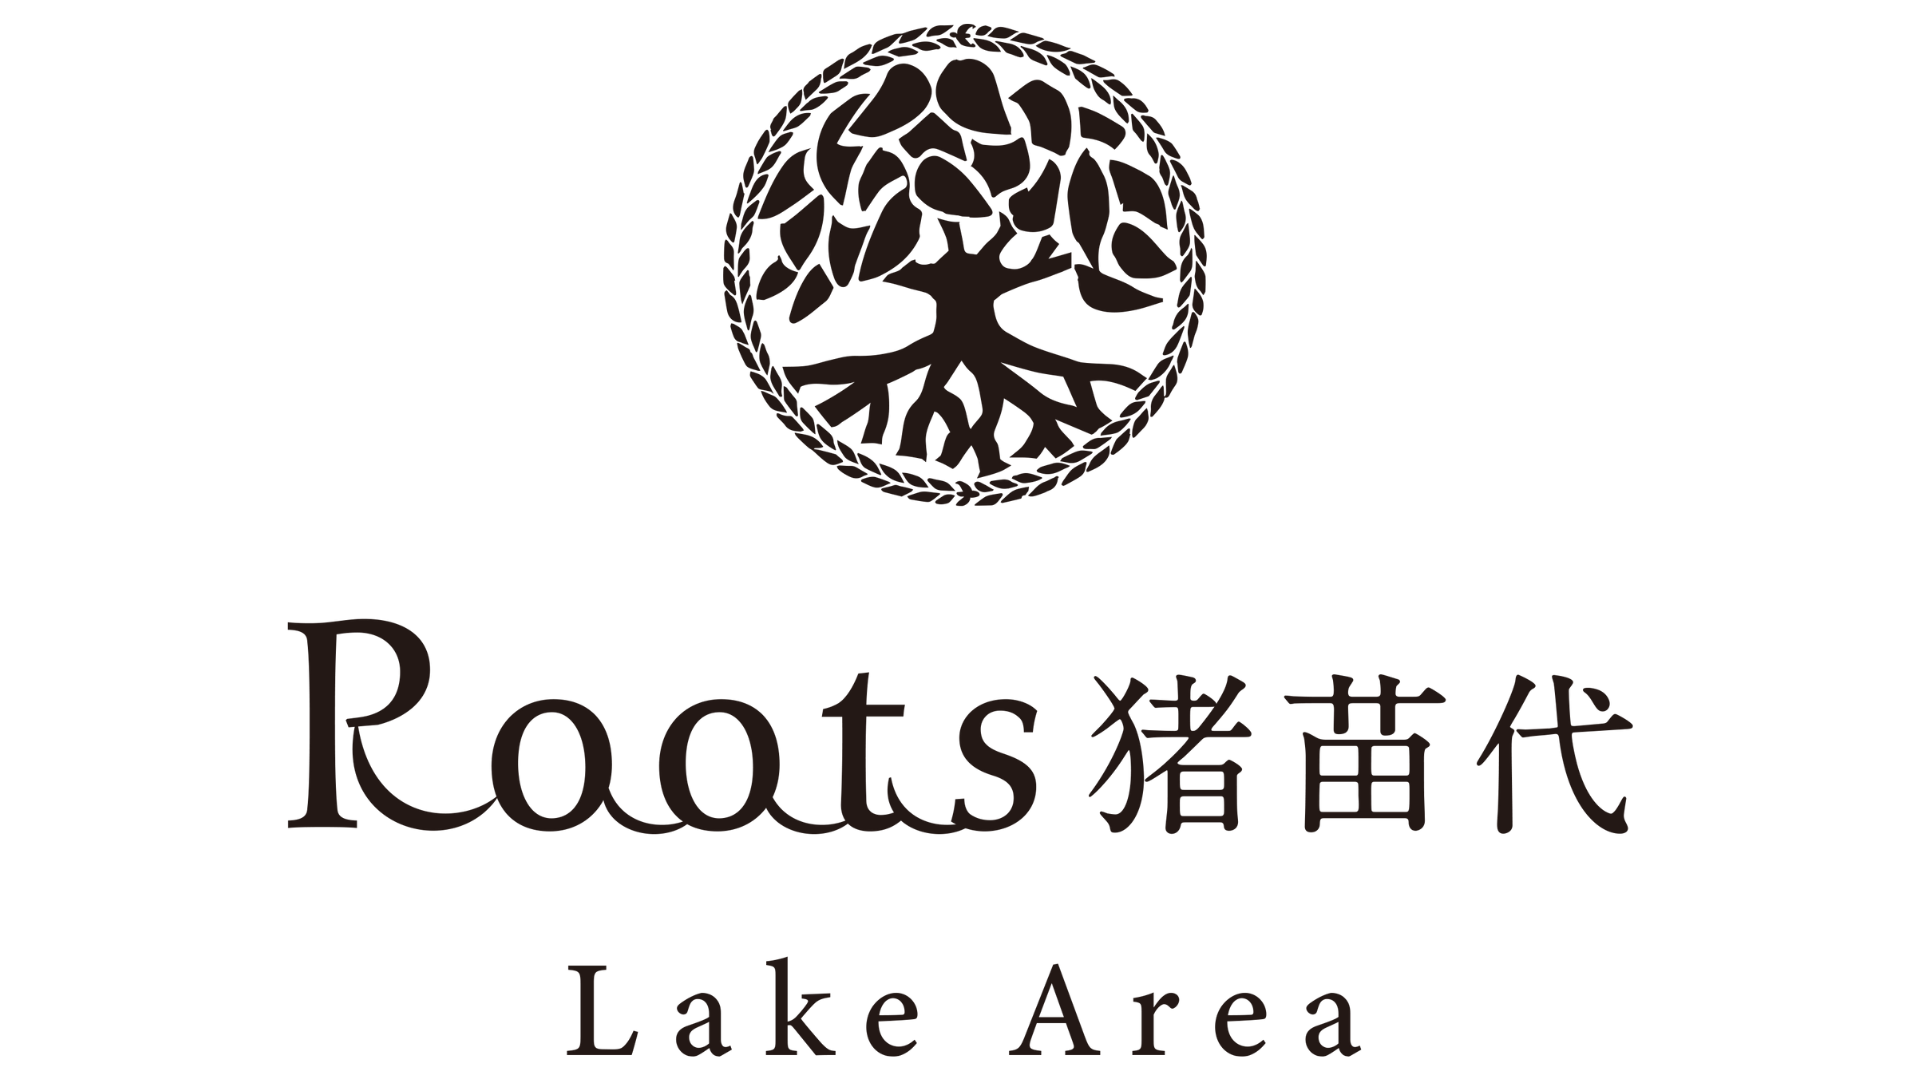 Roots猪苗代 LakeArea